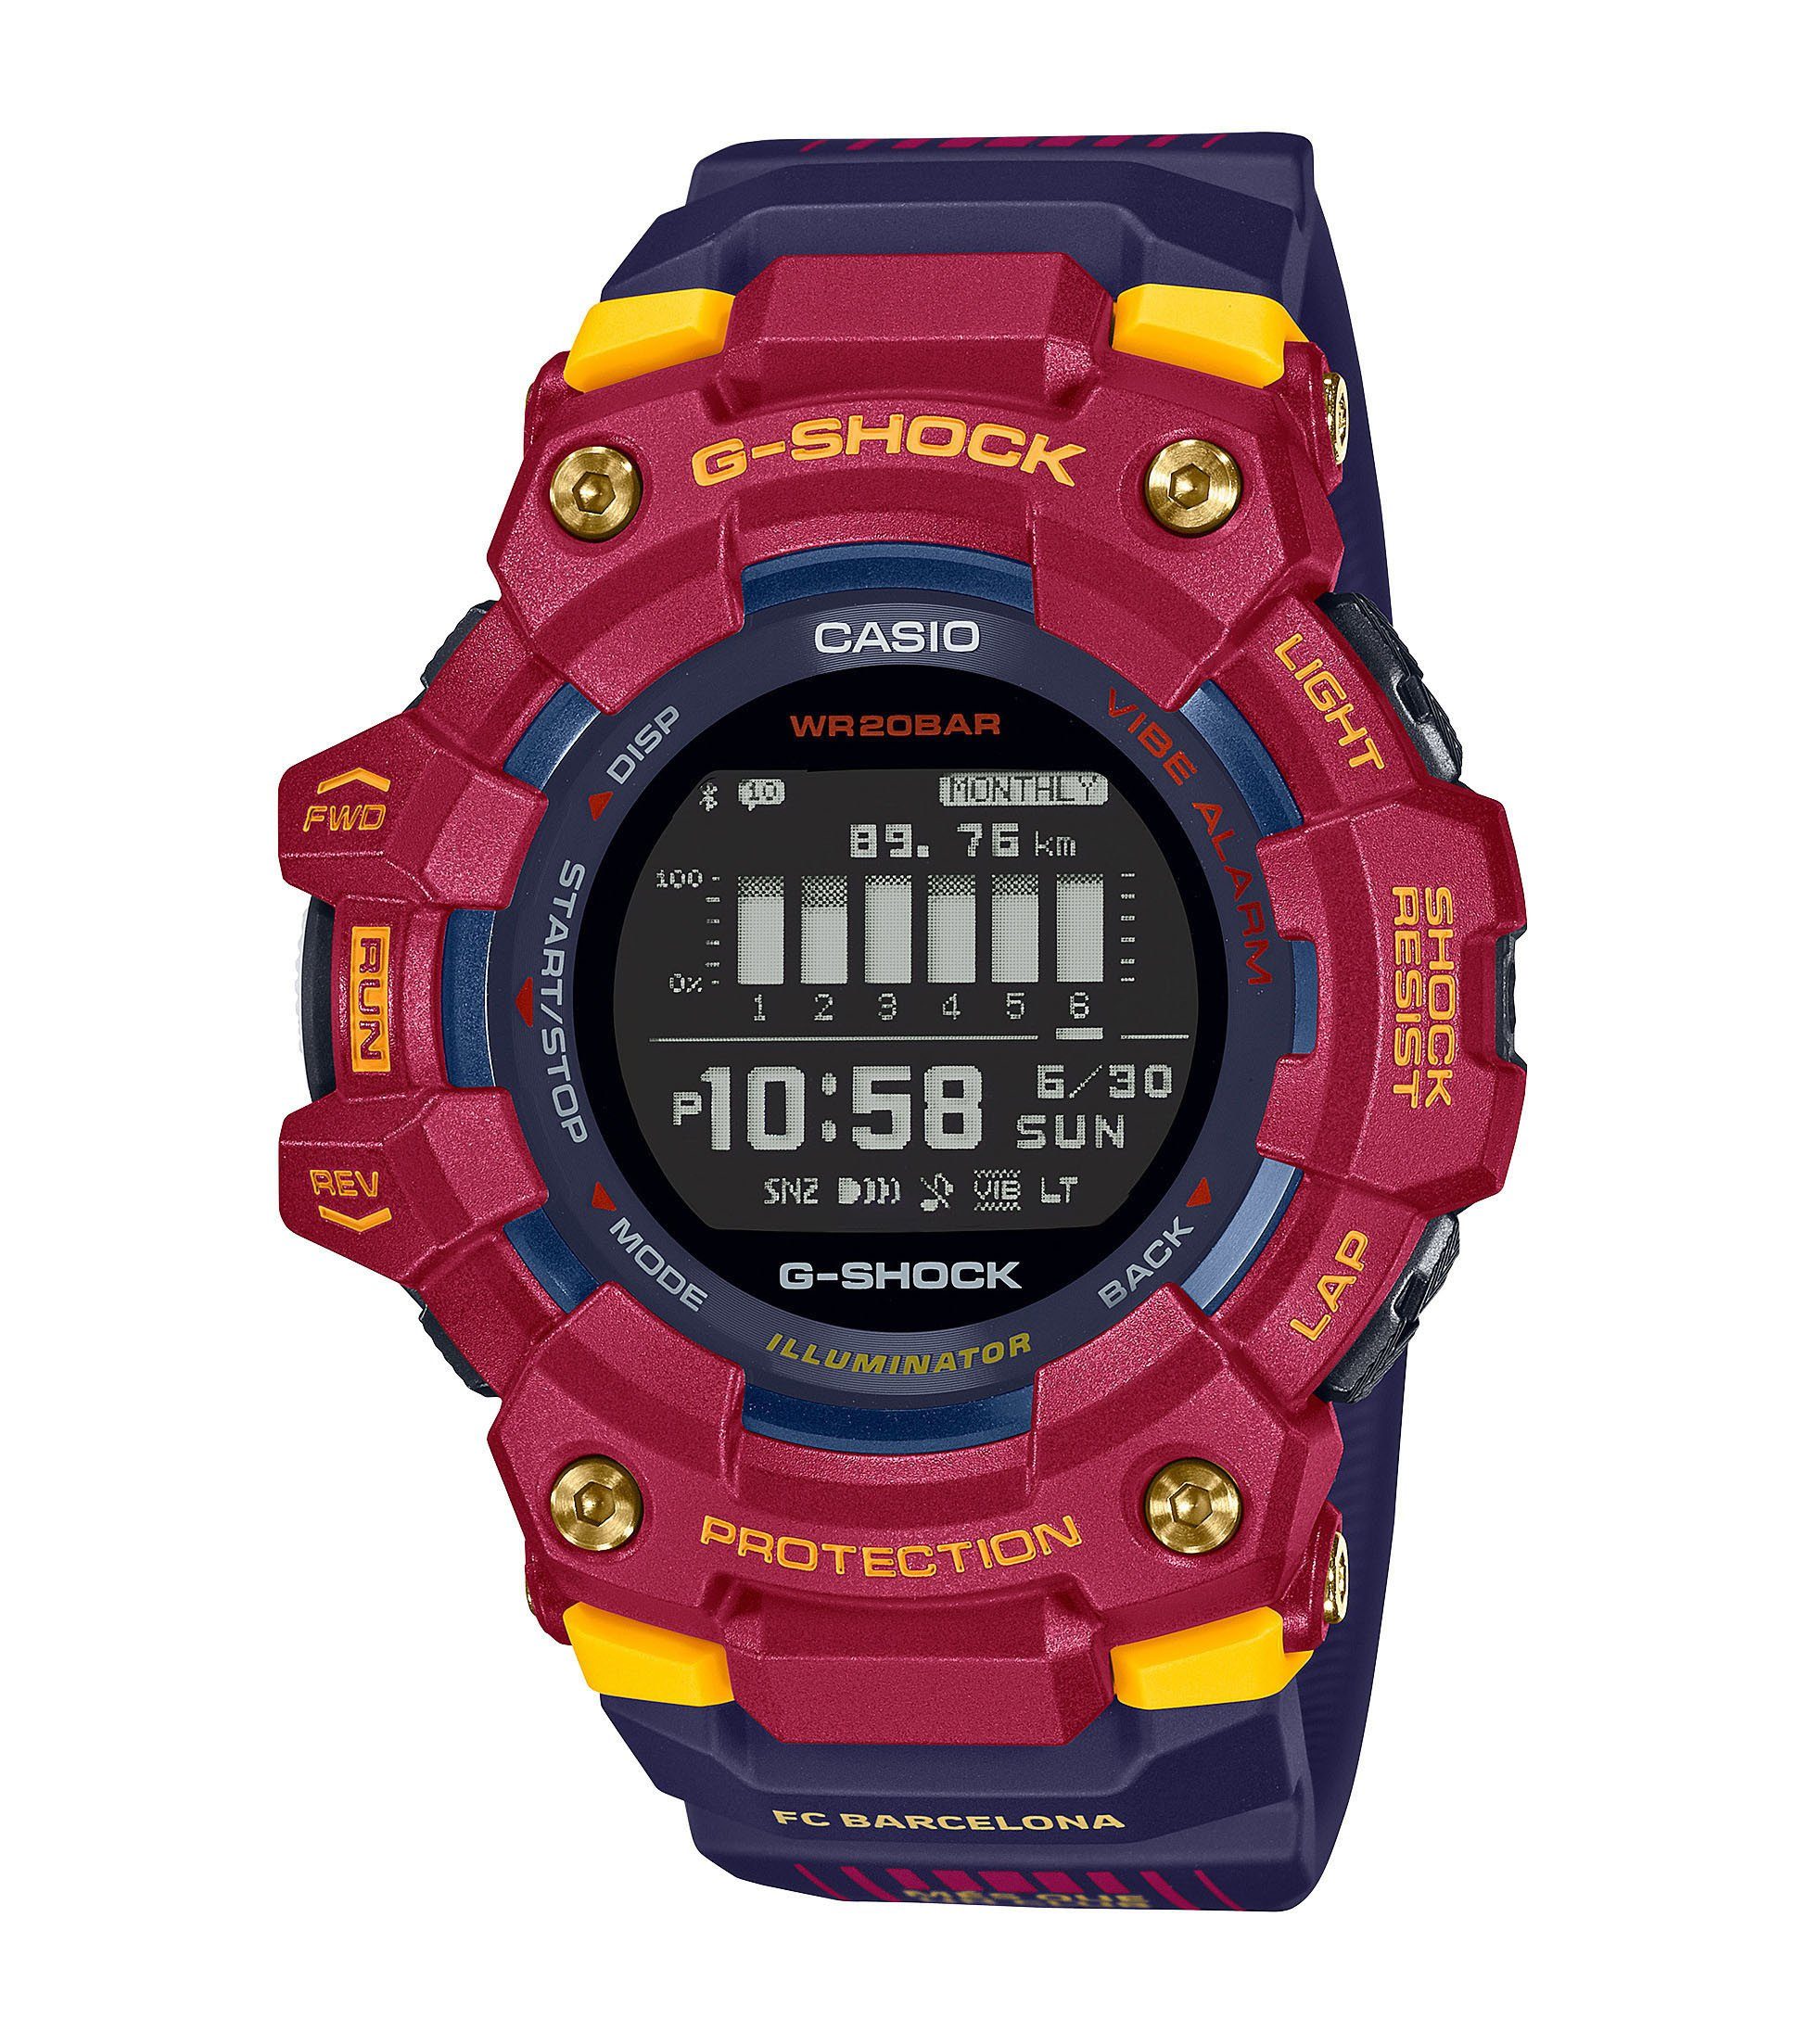 CASIO Digitaluhr, Casio G-Shock FC Barcelona Bluetooth Uhr GBD-100BAR-4ER